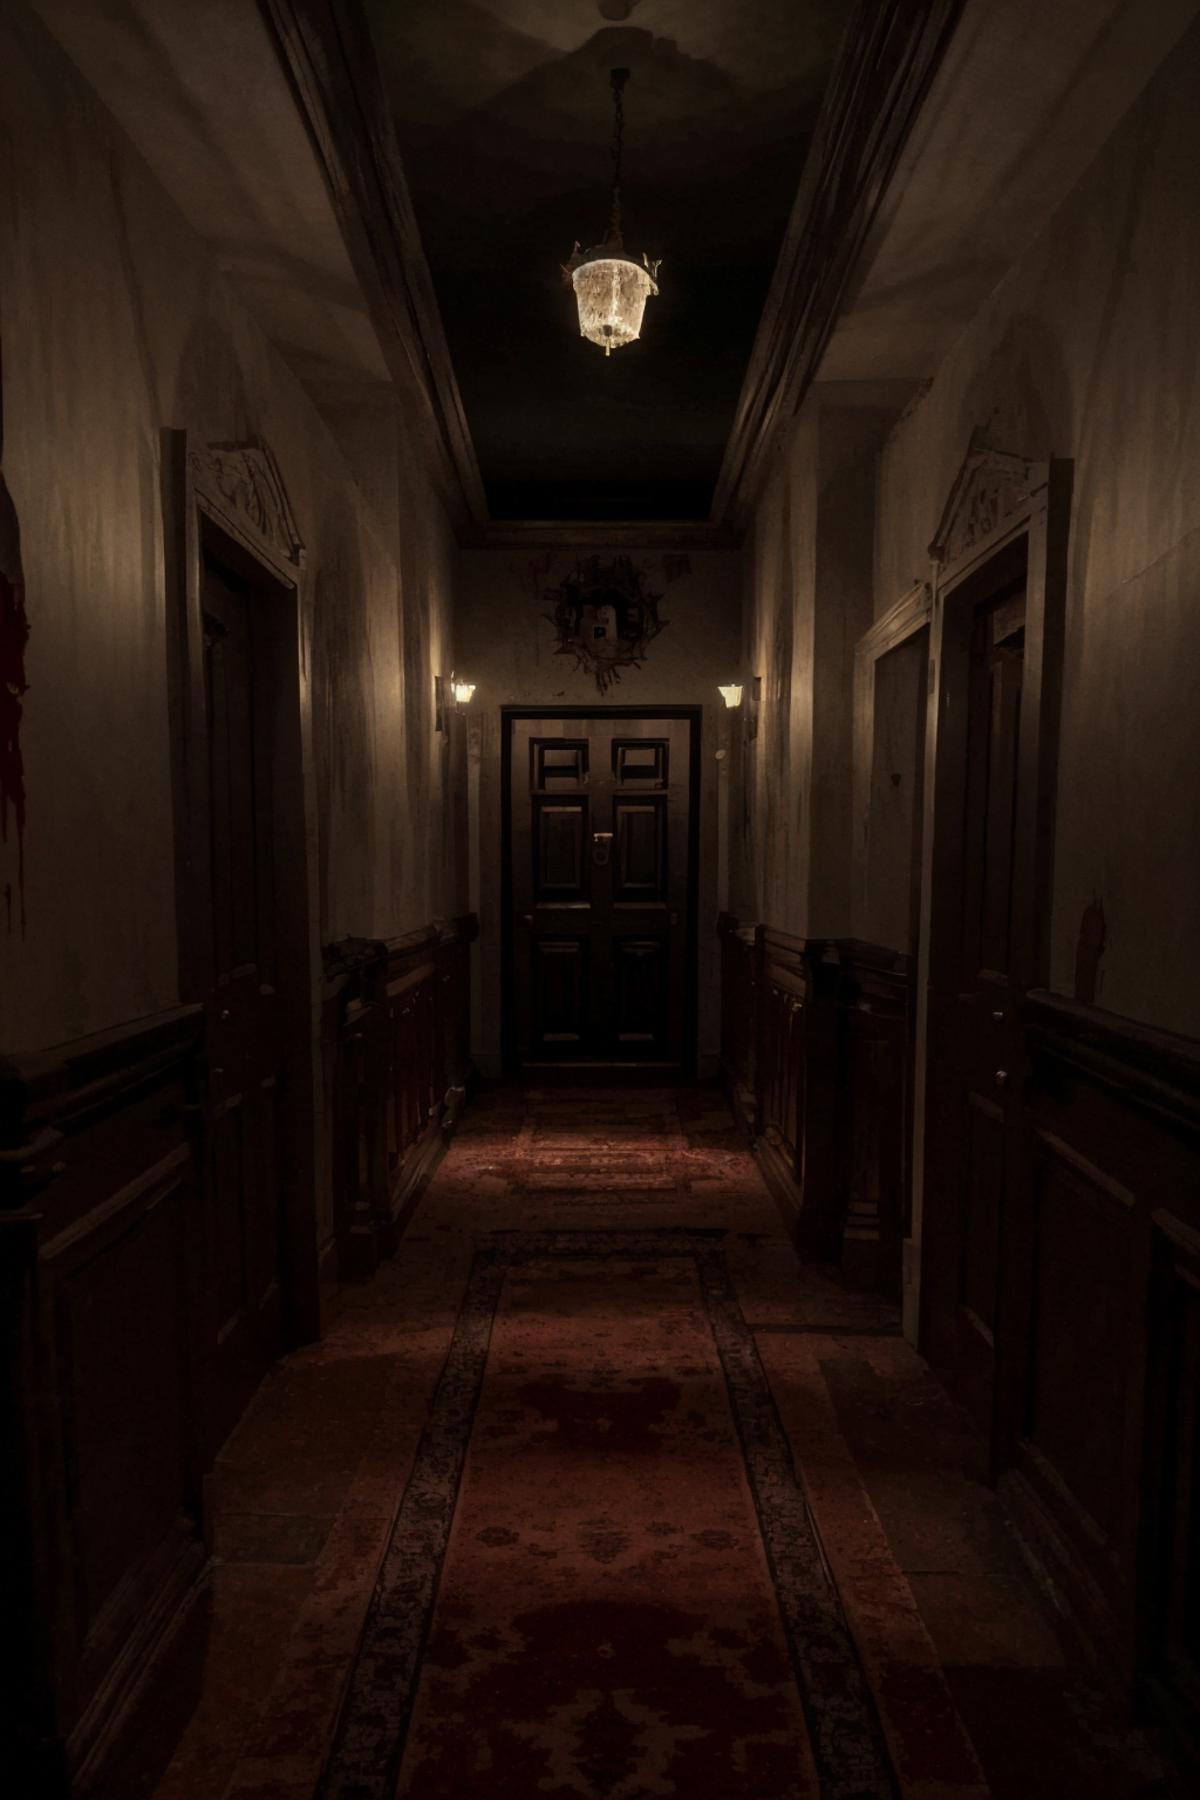 Resident Evil (1996) Mansion Background image by WilliamTRiker